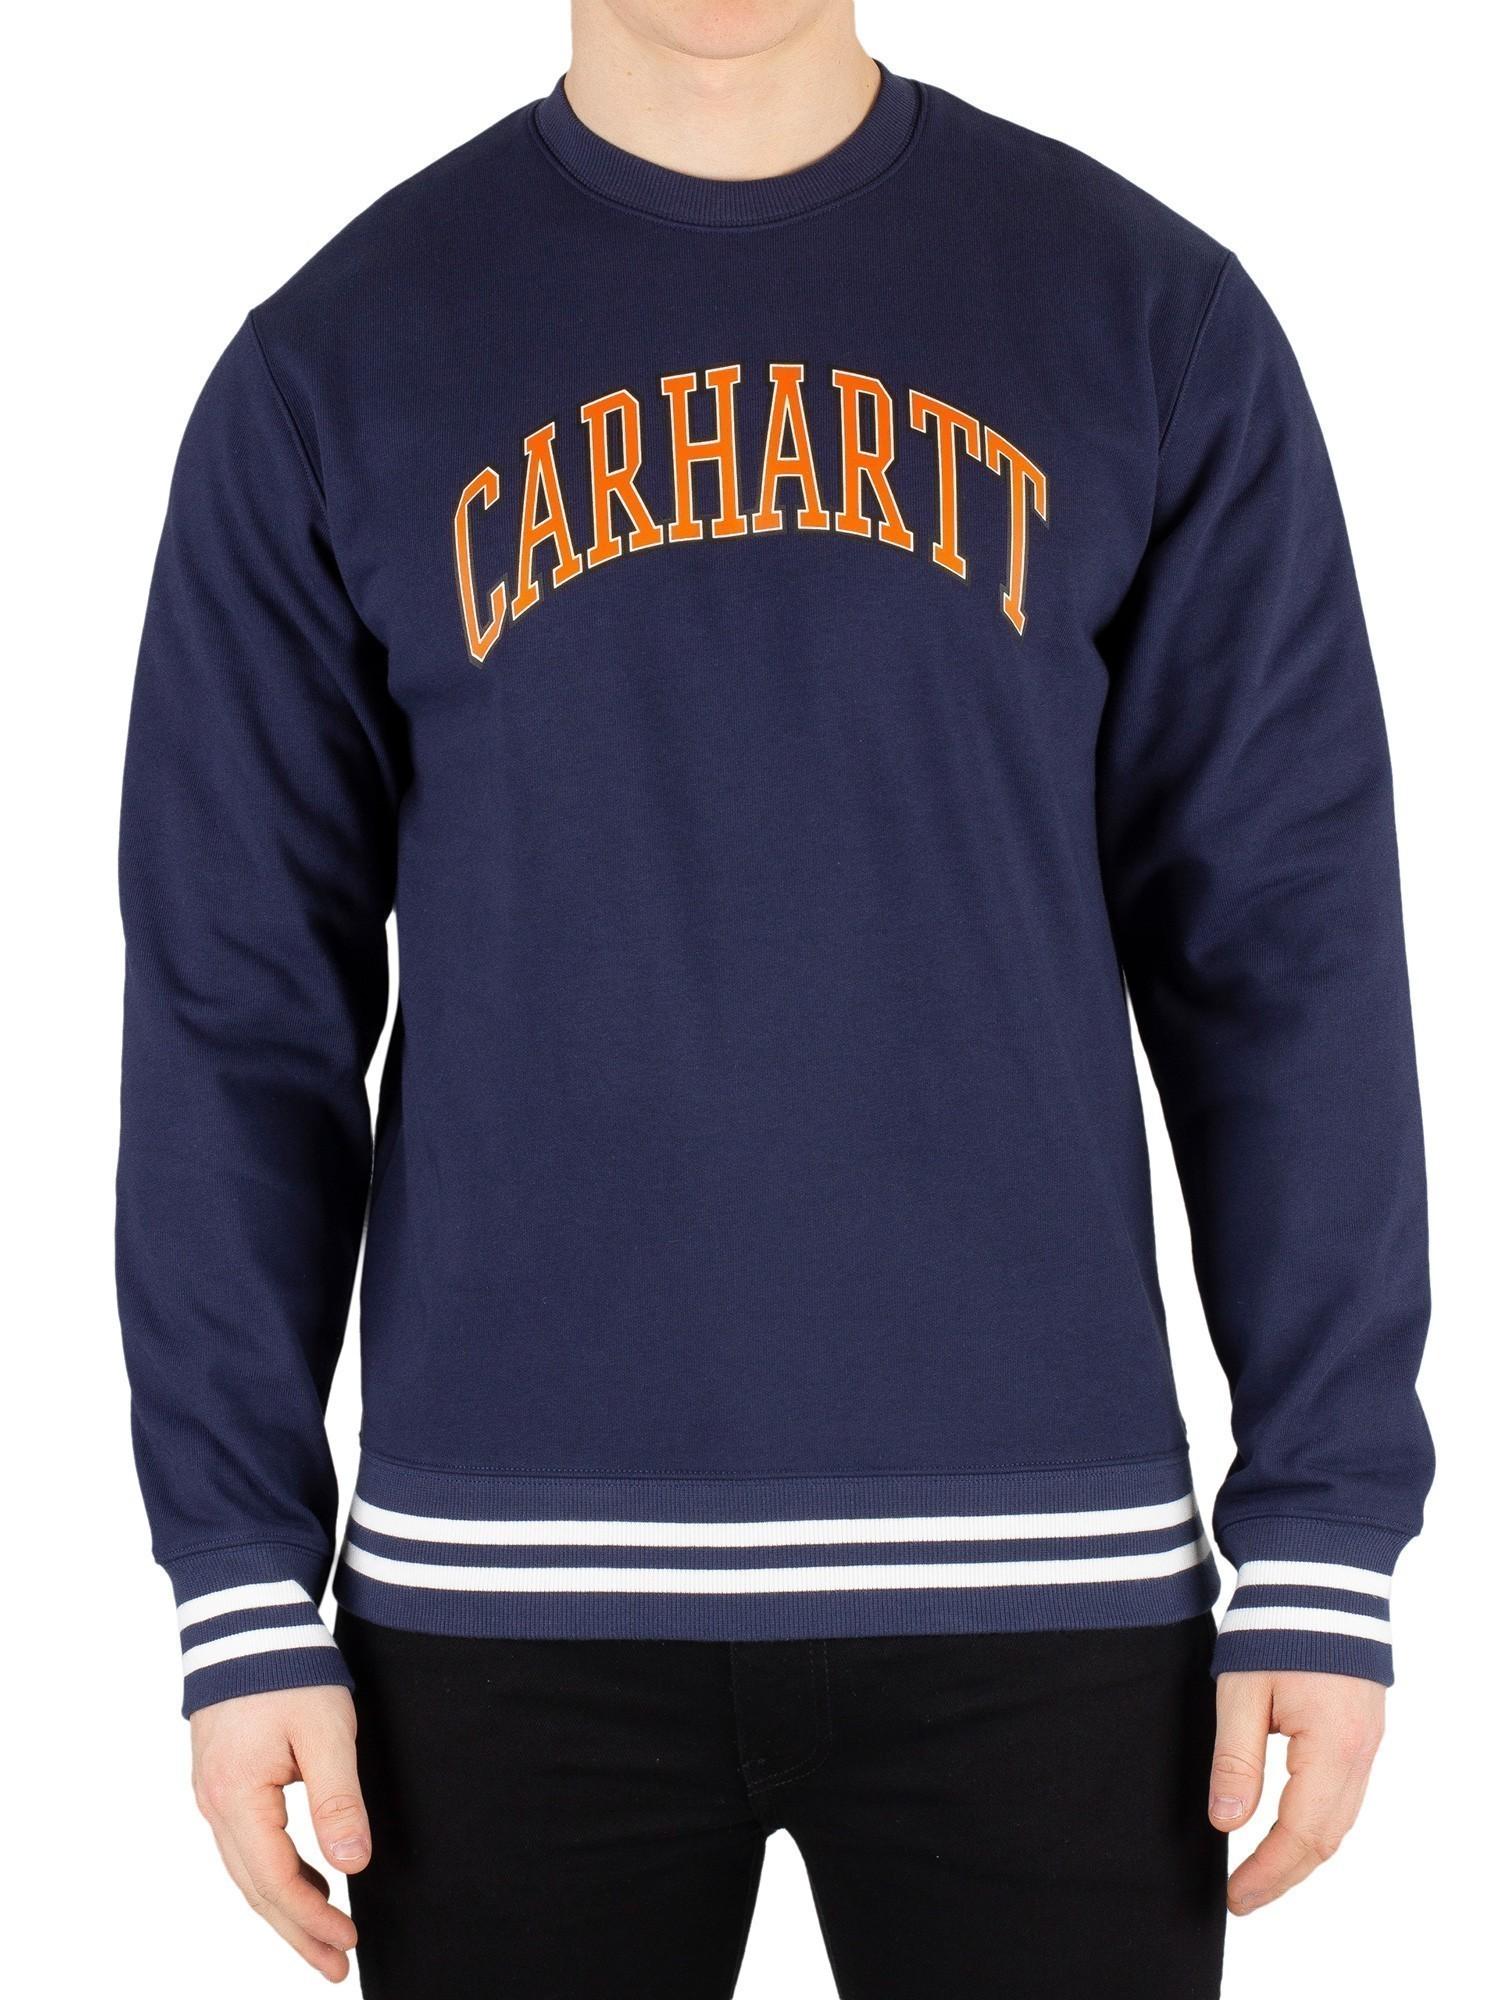 Carhartt WIP Cotton Knowledge Sweatshirt in Blue for Men - Lyst